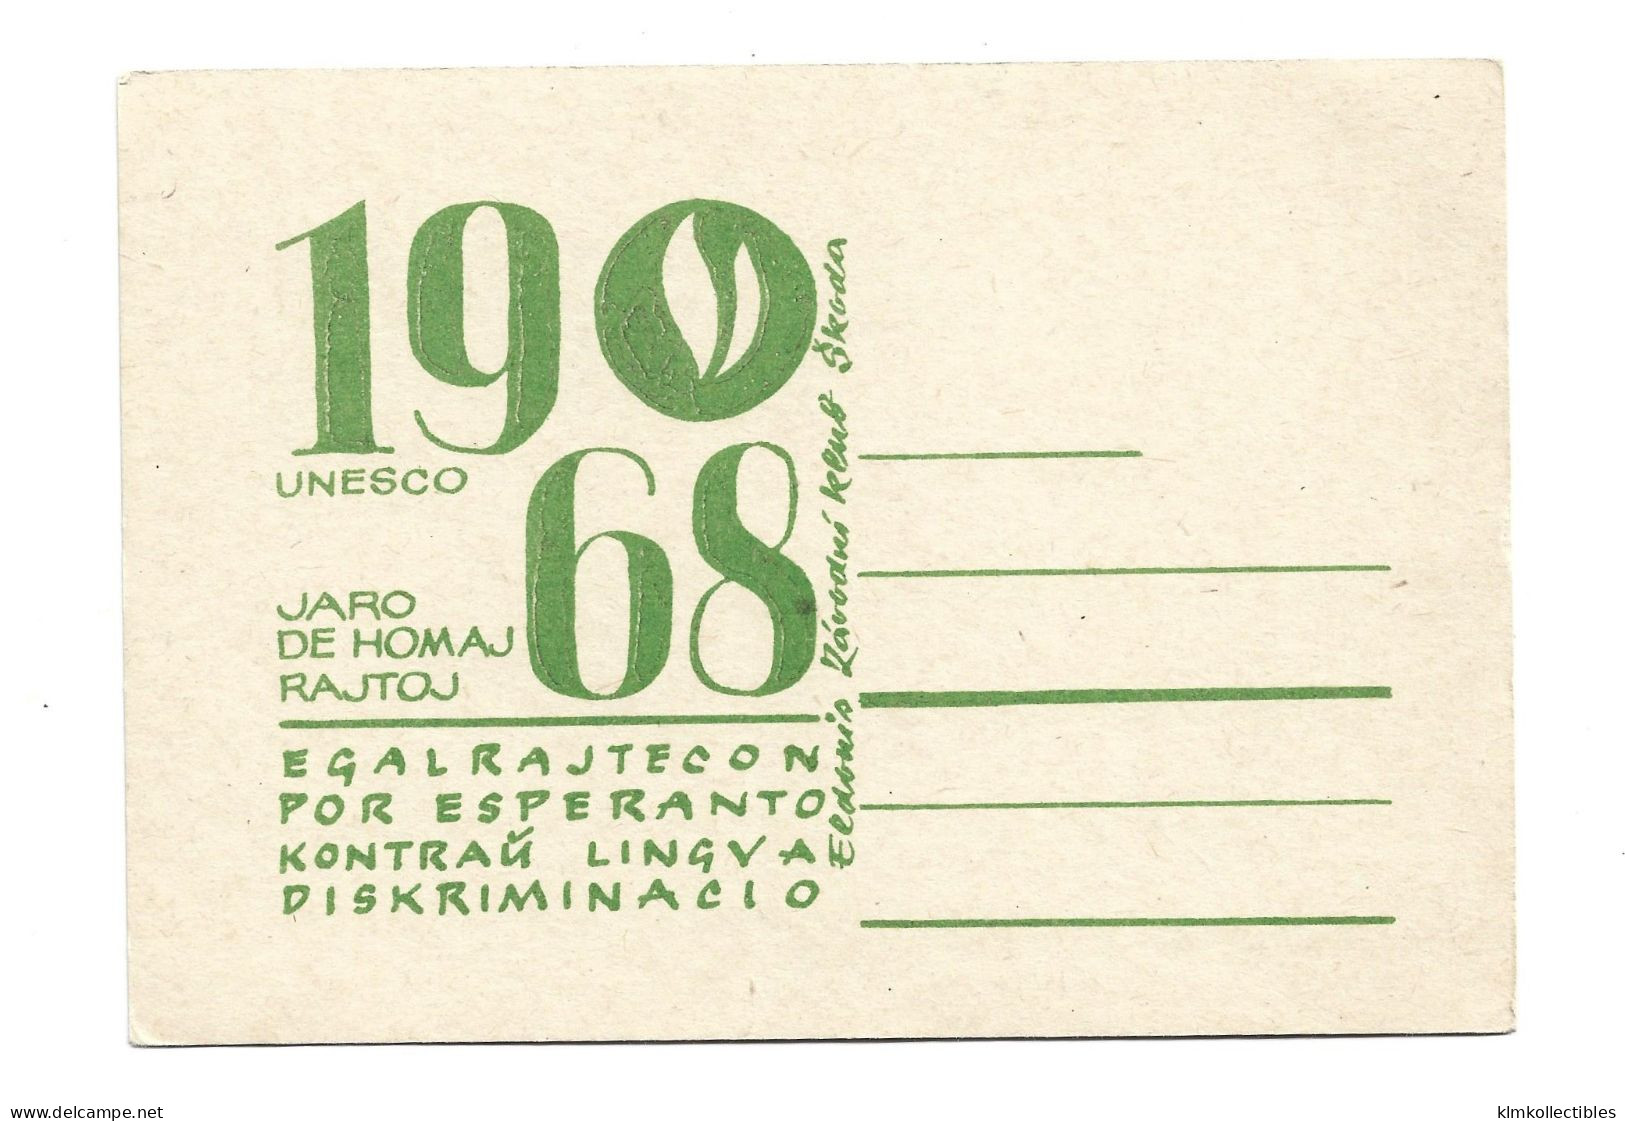 ESPERANTO UNUSED PC - 1968 UNESCO CZECHOSLOVAKIA - Esperanto